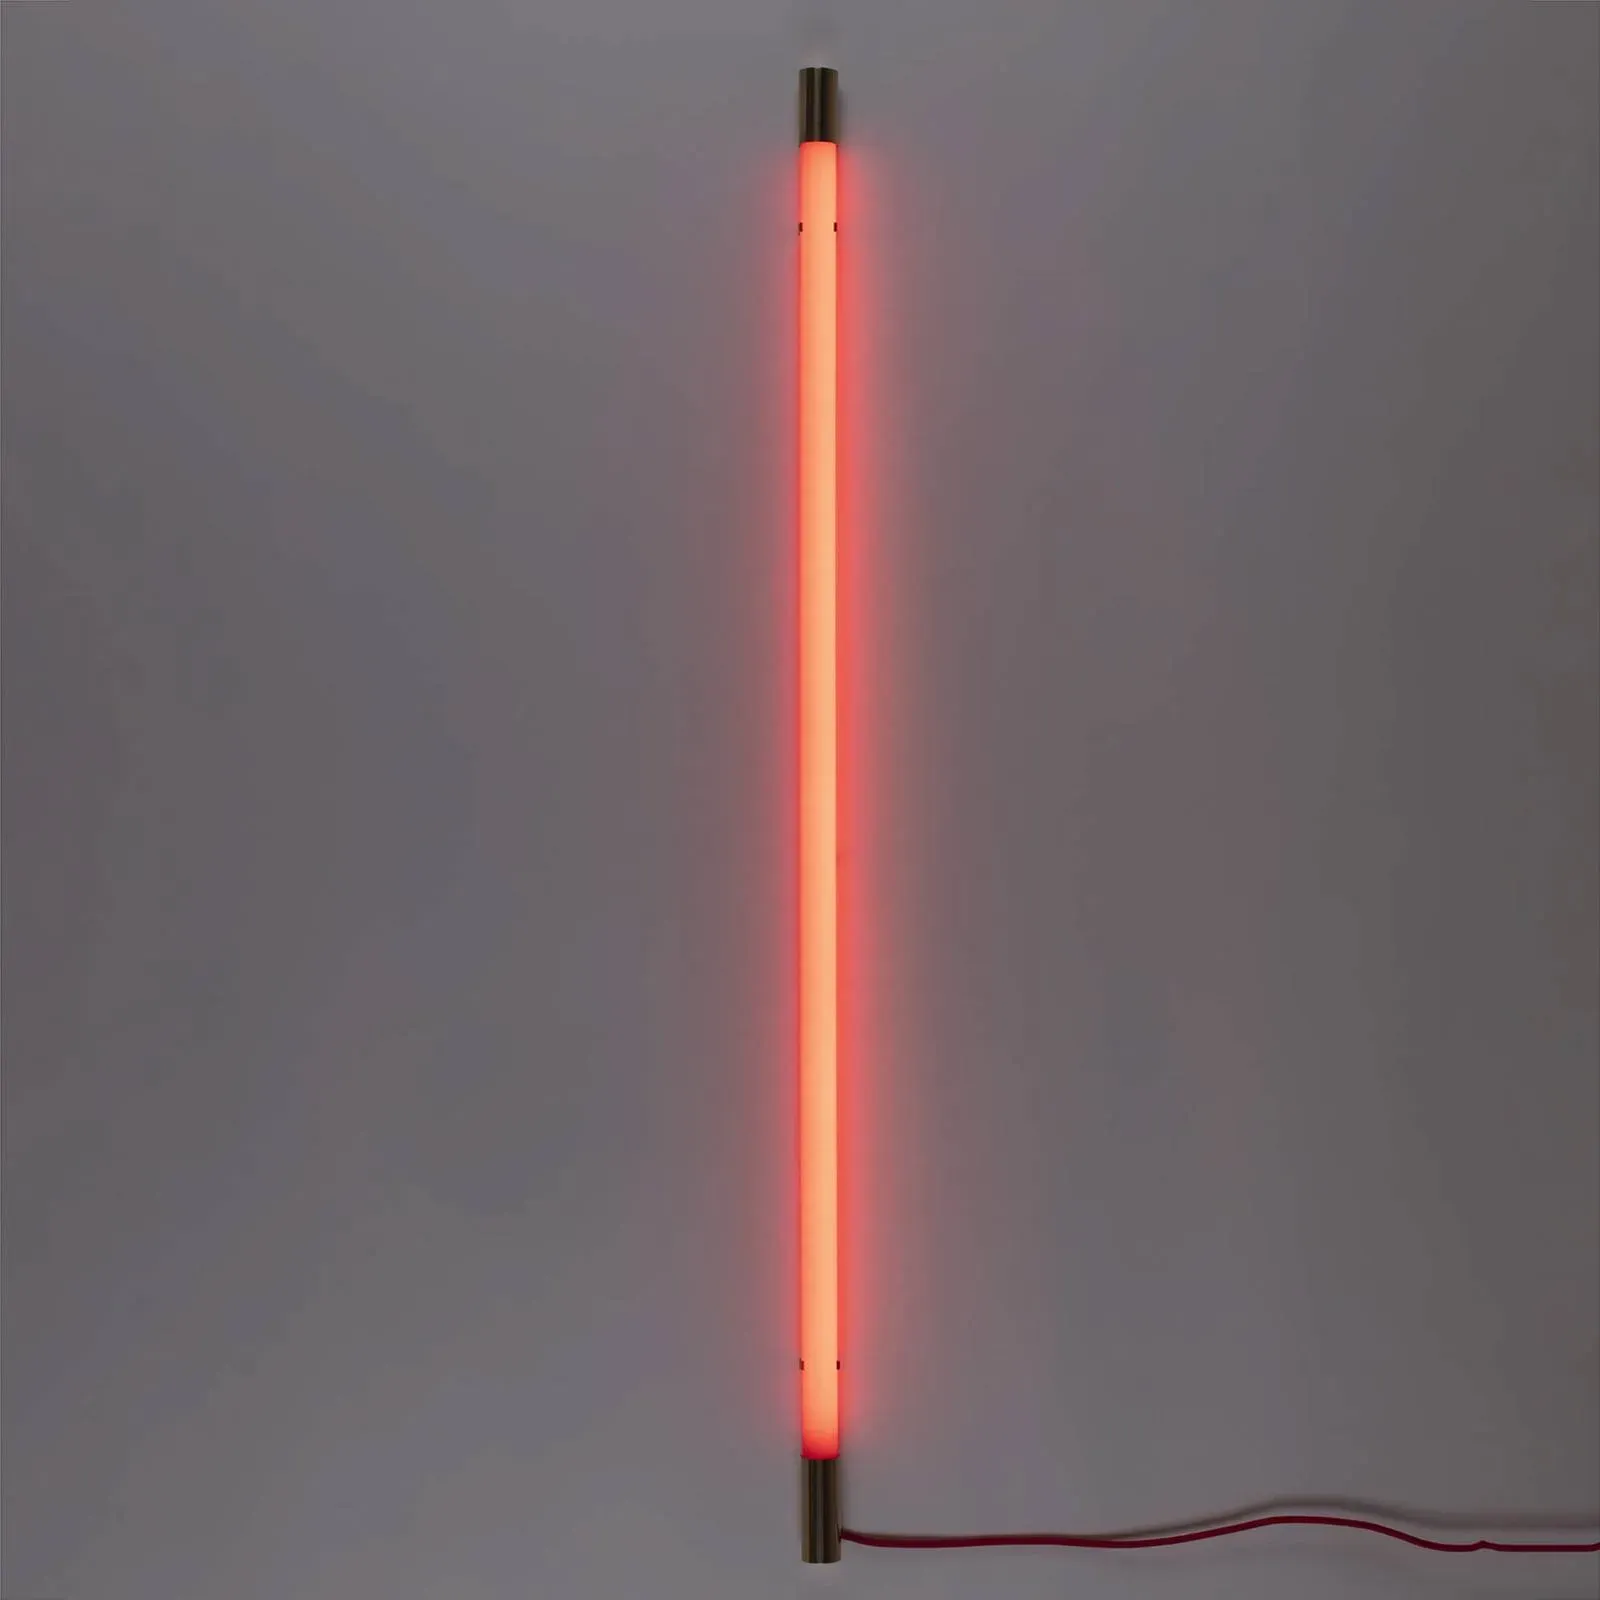 Bild von Linea Gold LED-Wandlampe, rot